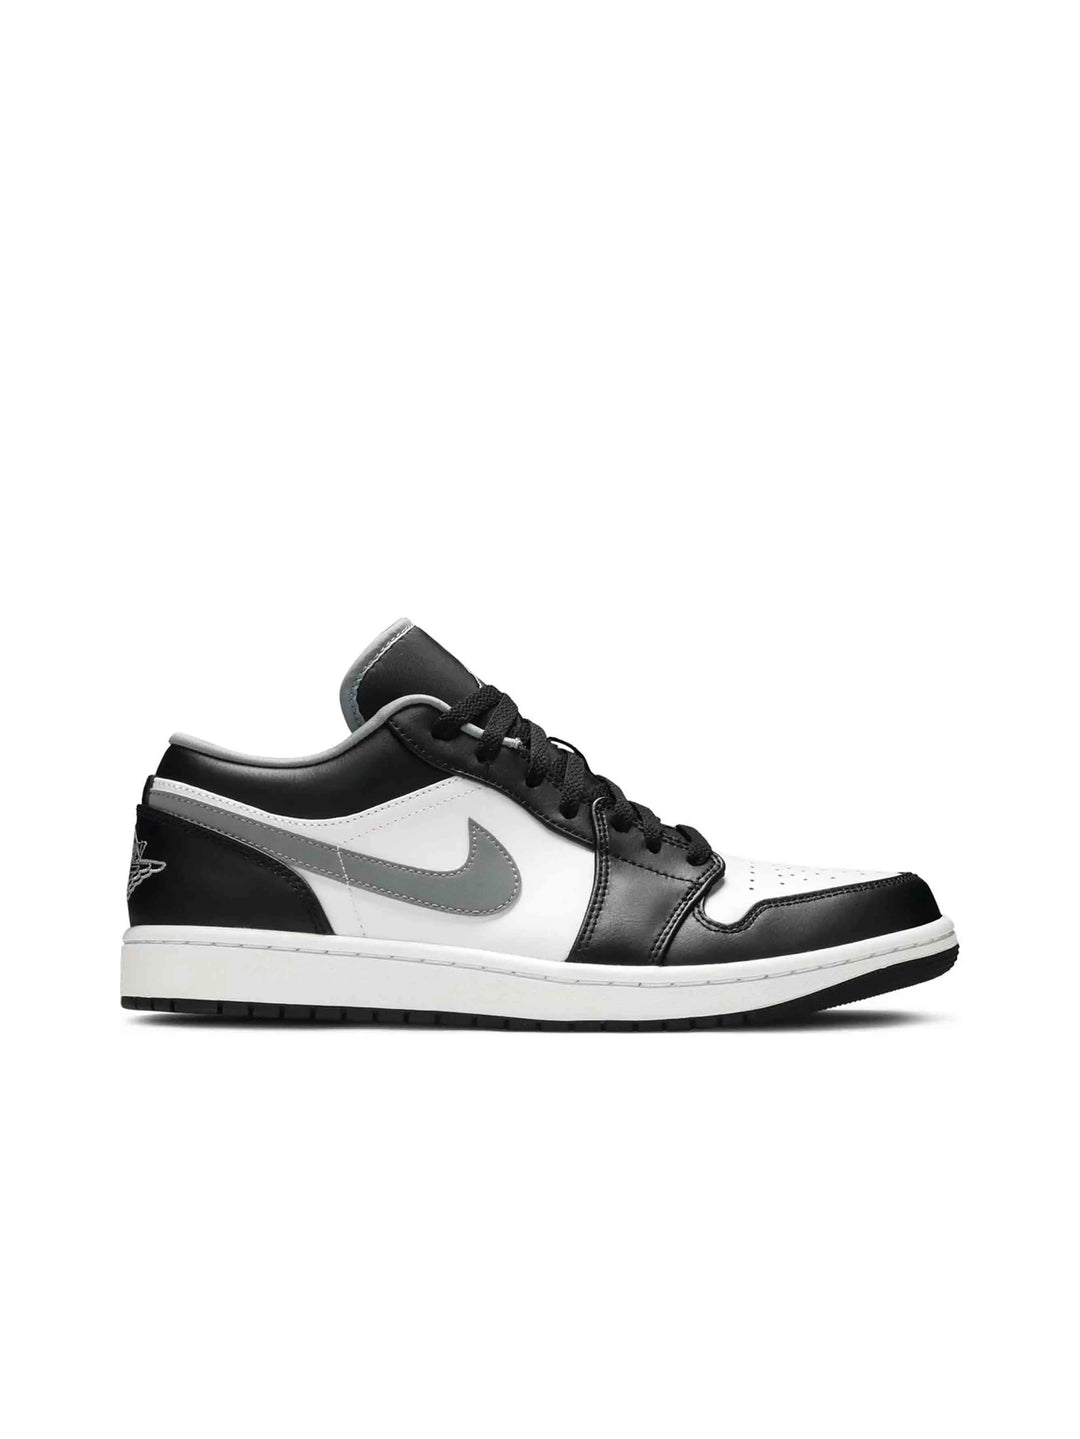 Nike Air Jordan 1 Low Black White Grey Prior